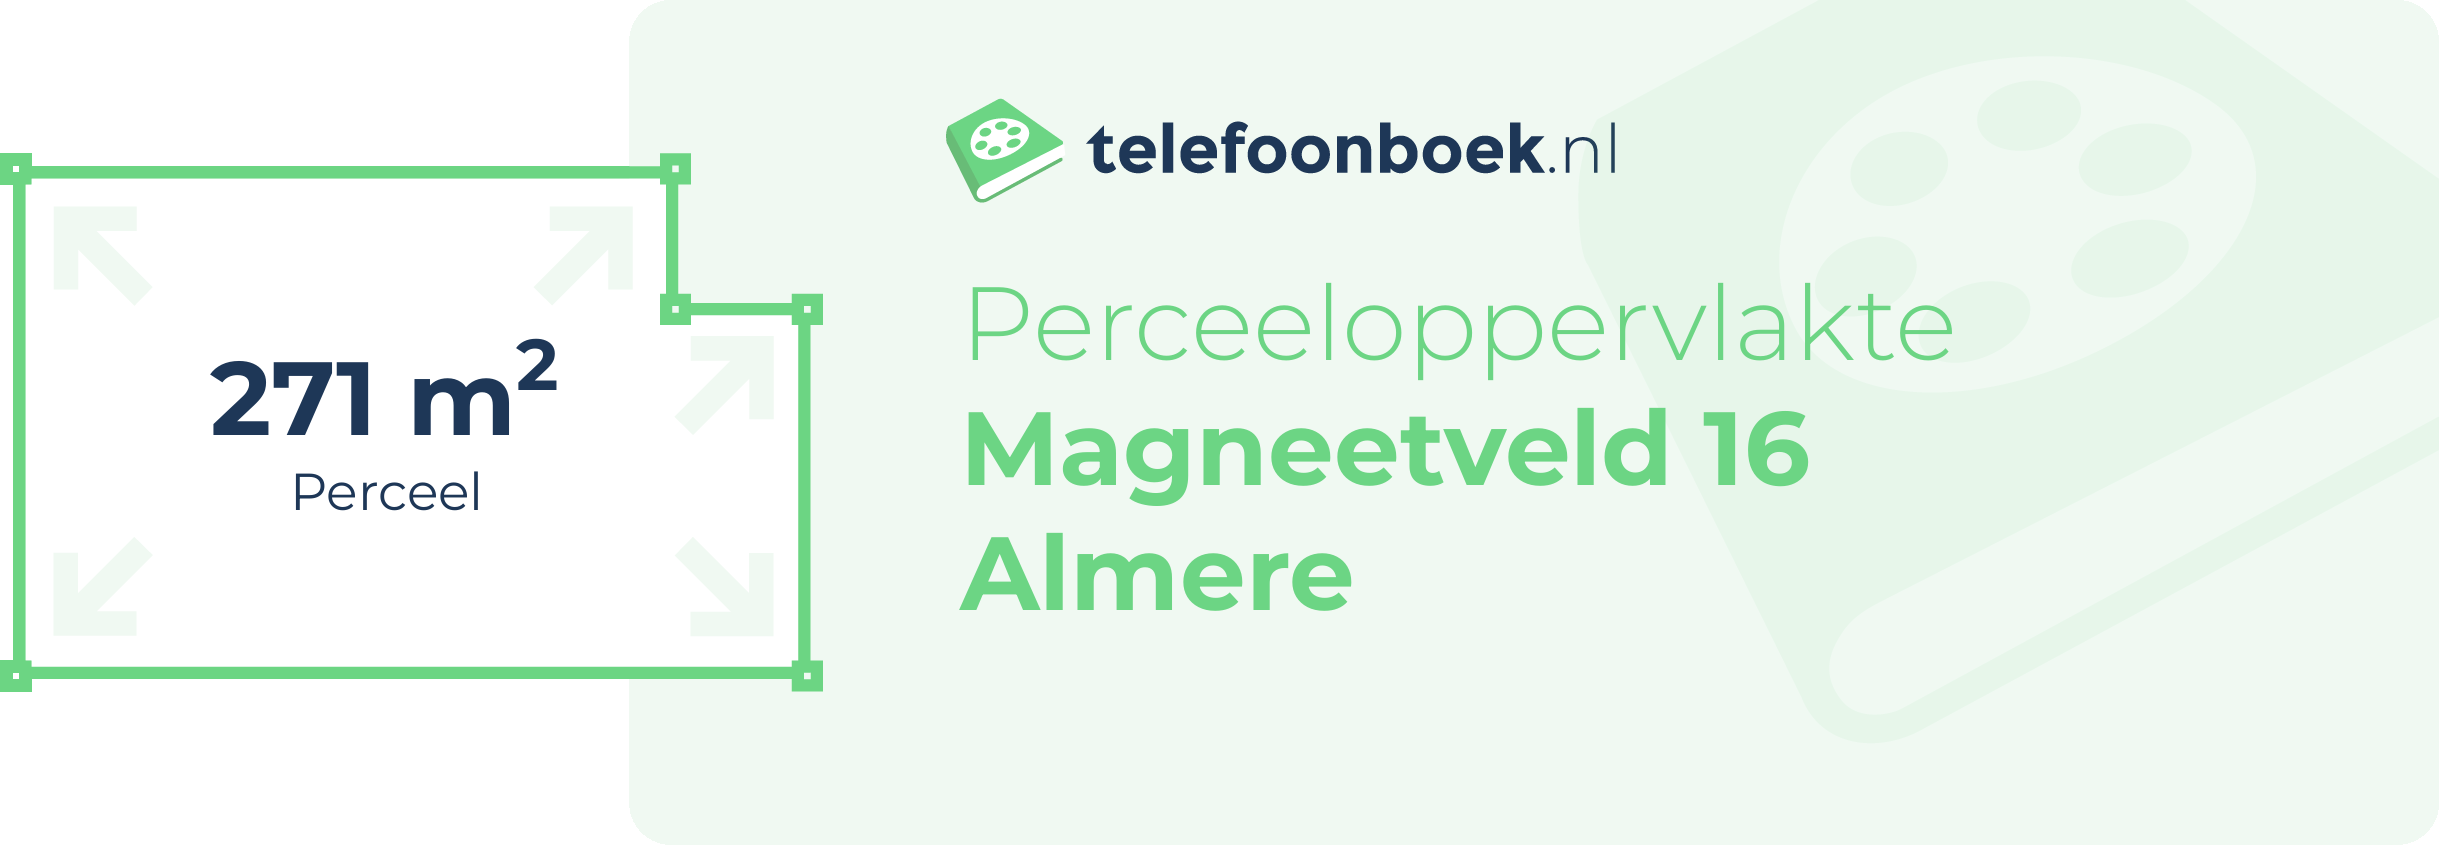 Perceeloppervlakte Magneetveld 16 Almere